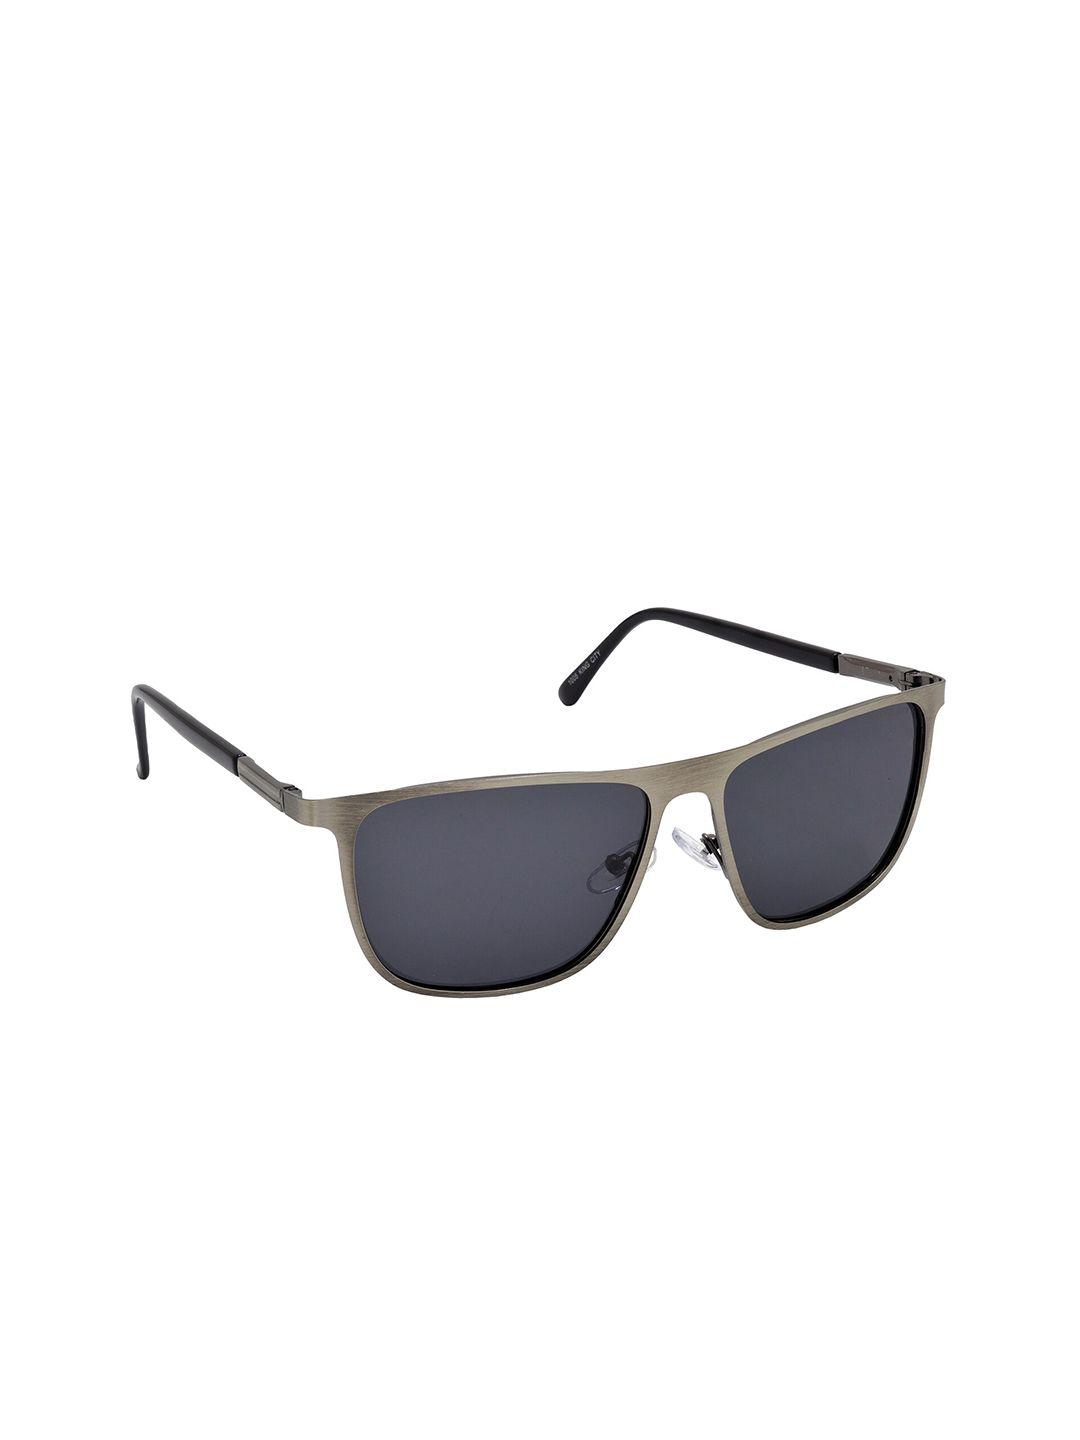 hrinkar unisex wayfarer sunglasses with polarised and uv protected lens hrs-kc1005